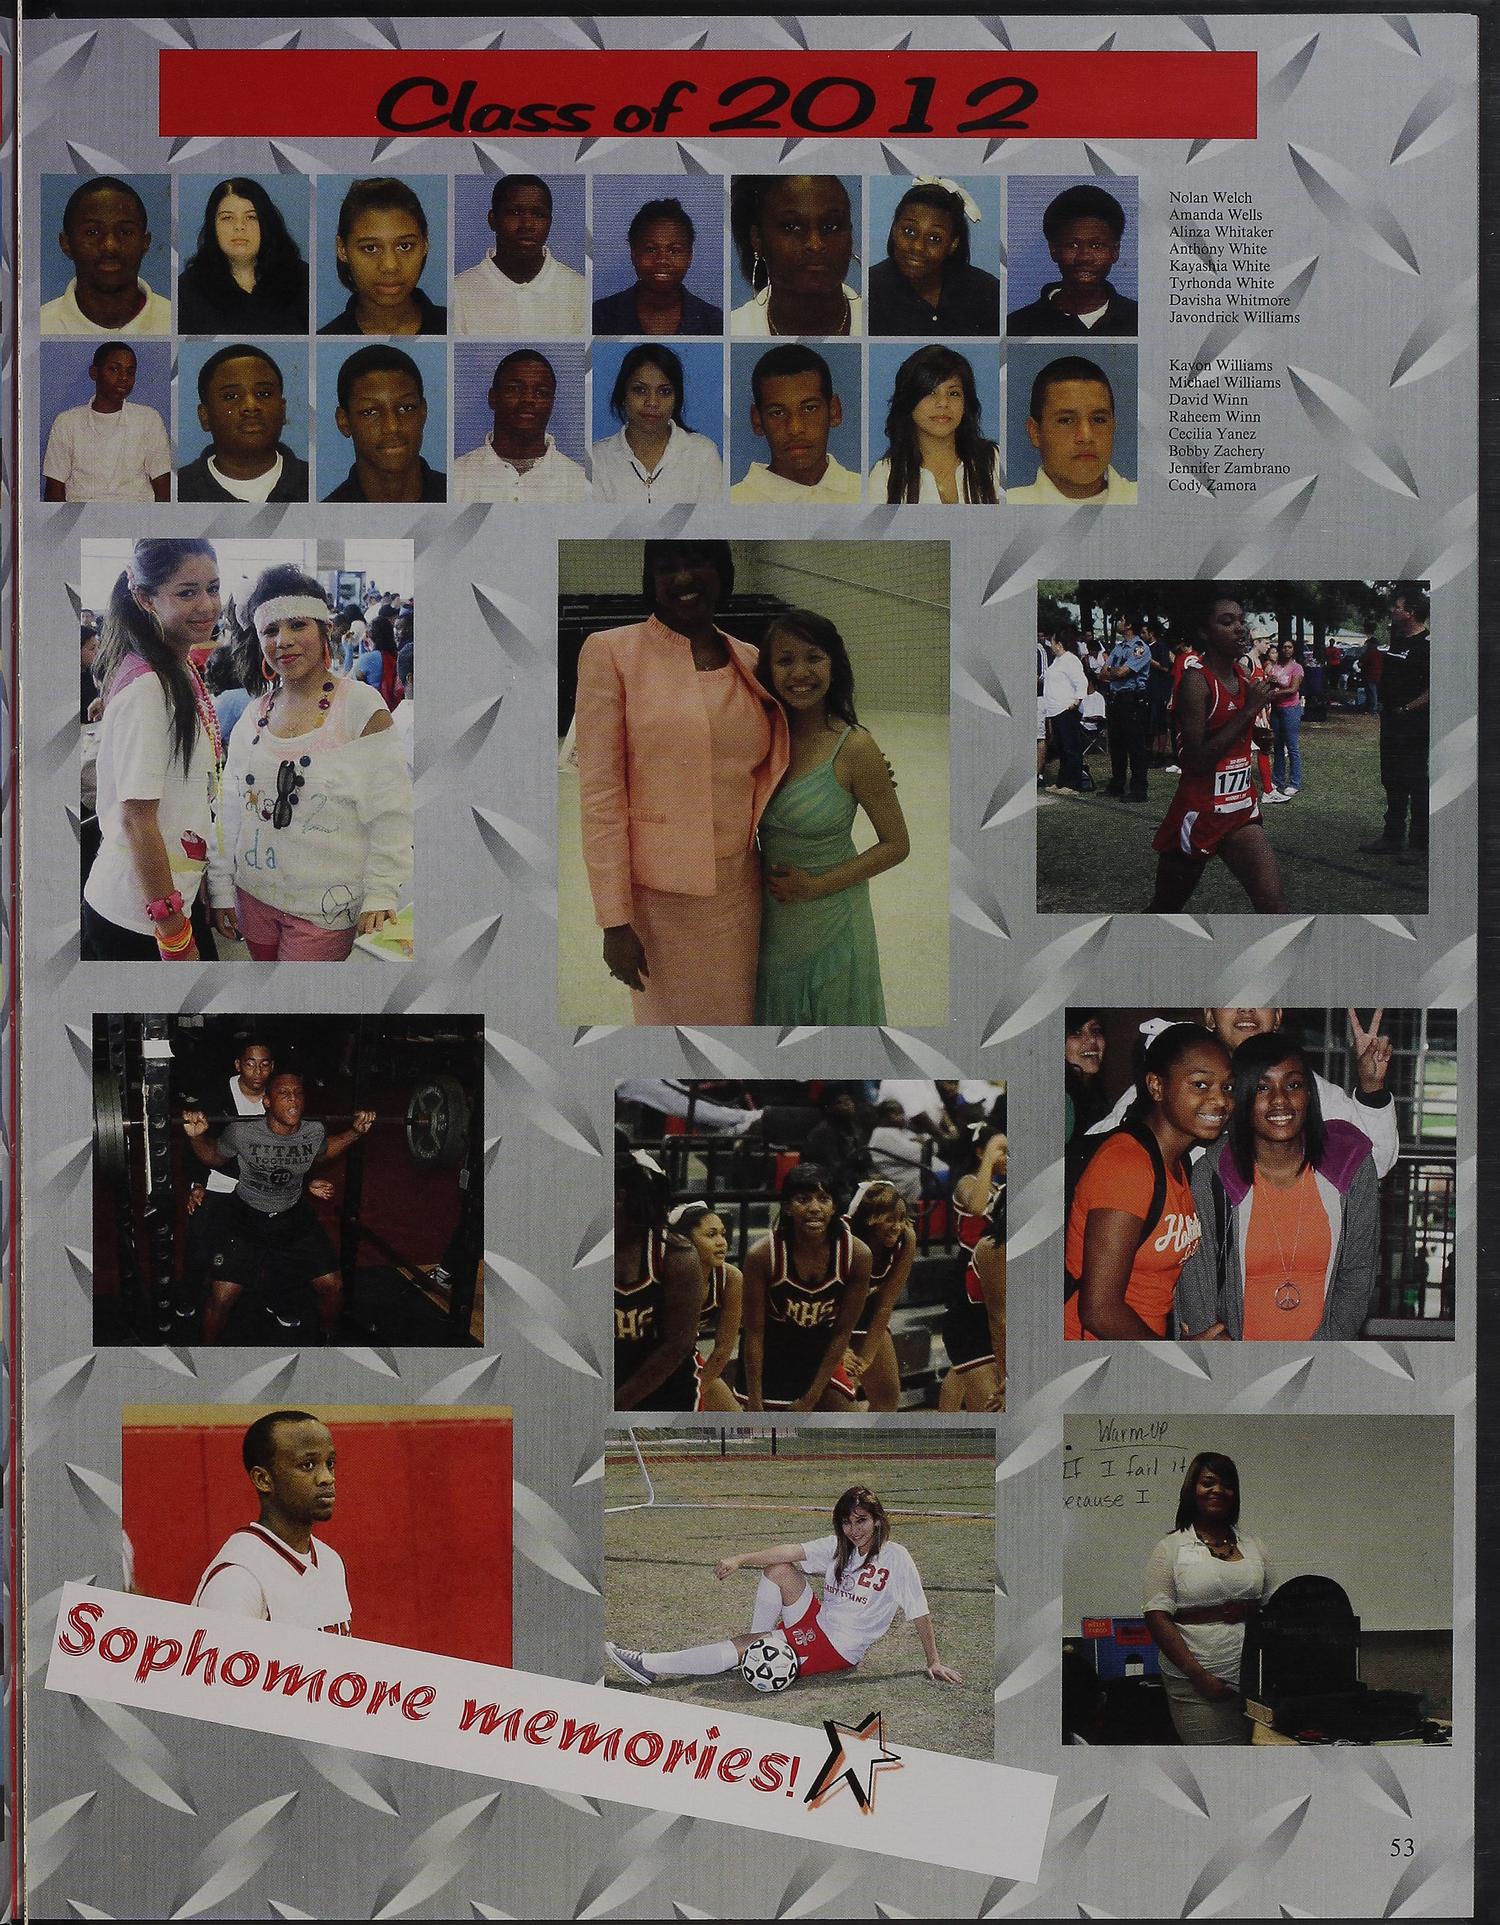 Titanium, Yearbook of Memorial High School, 2010
                                                
                                                    53
                                                